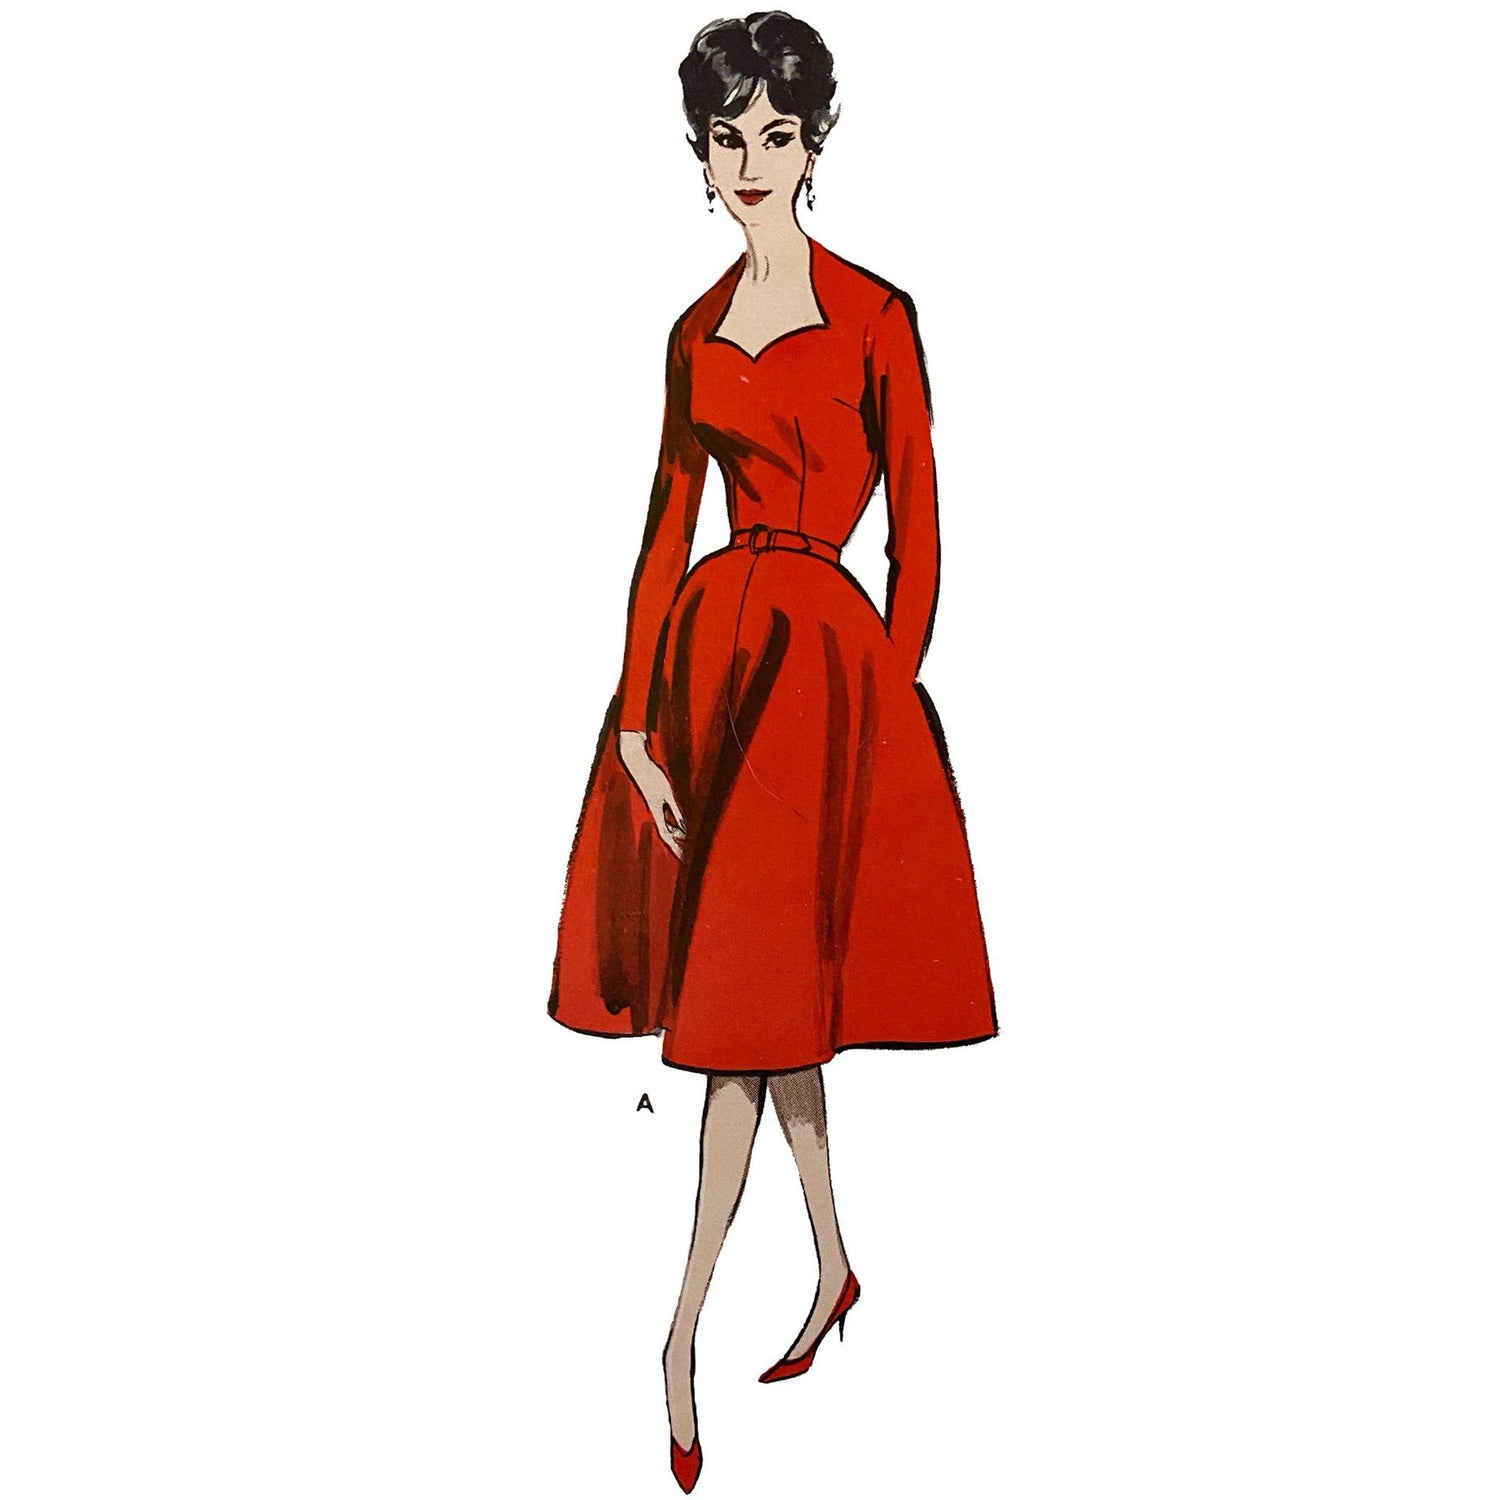 woman wearing a red dress